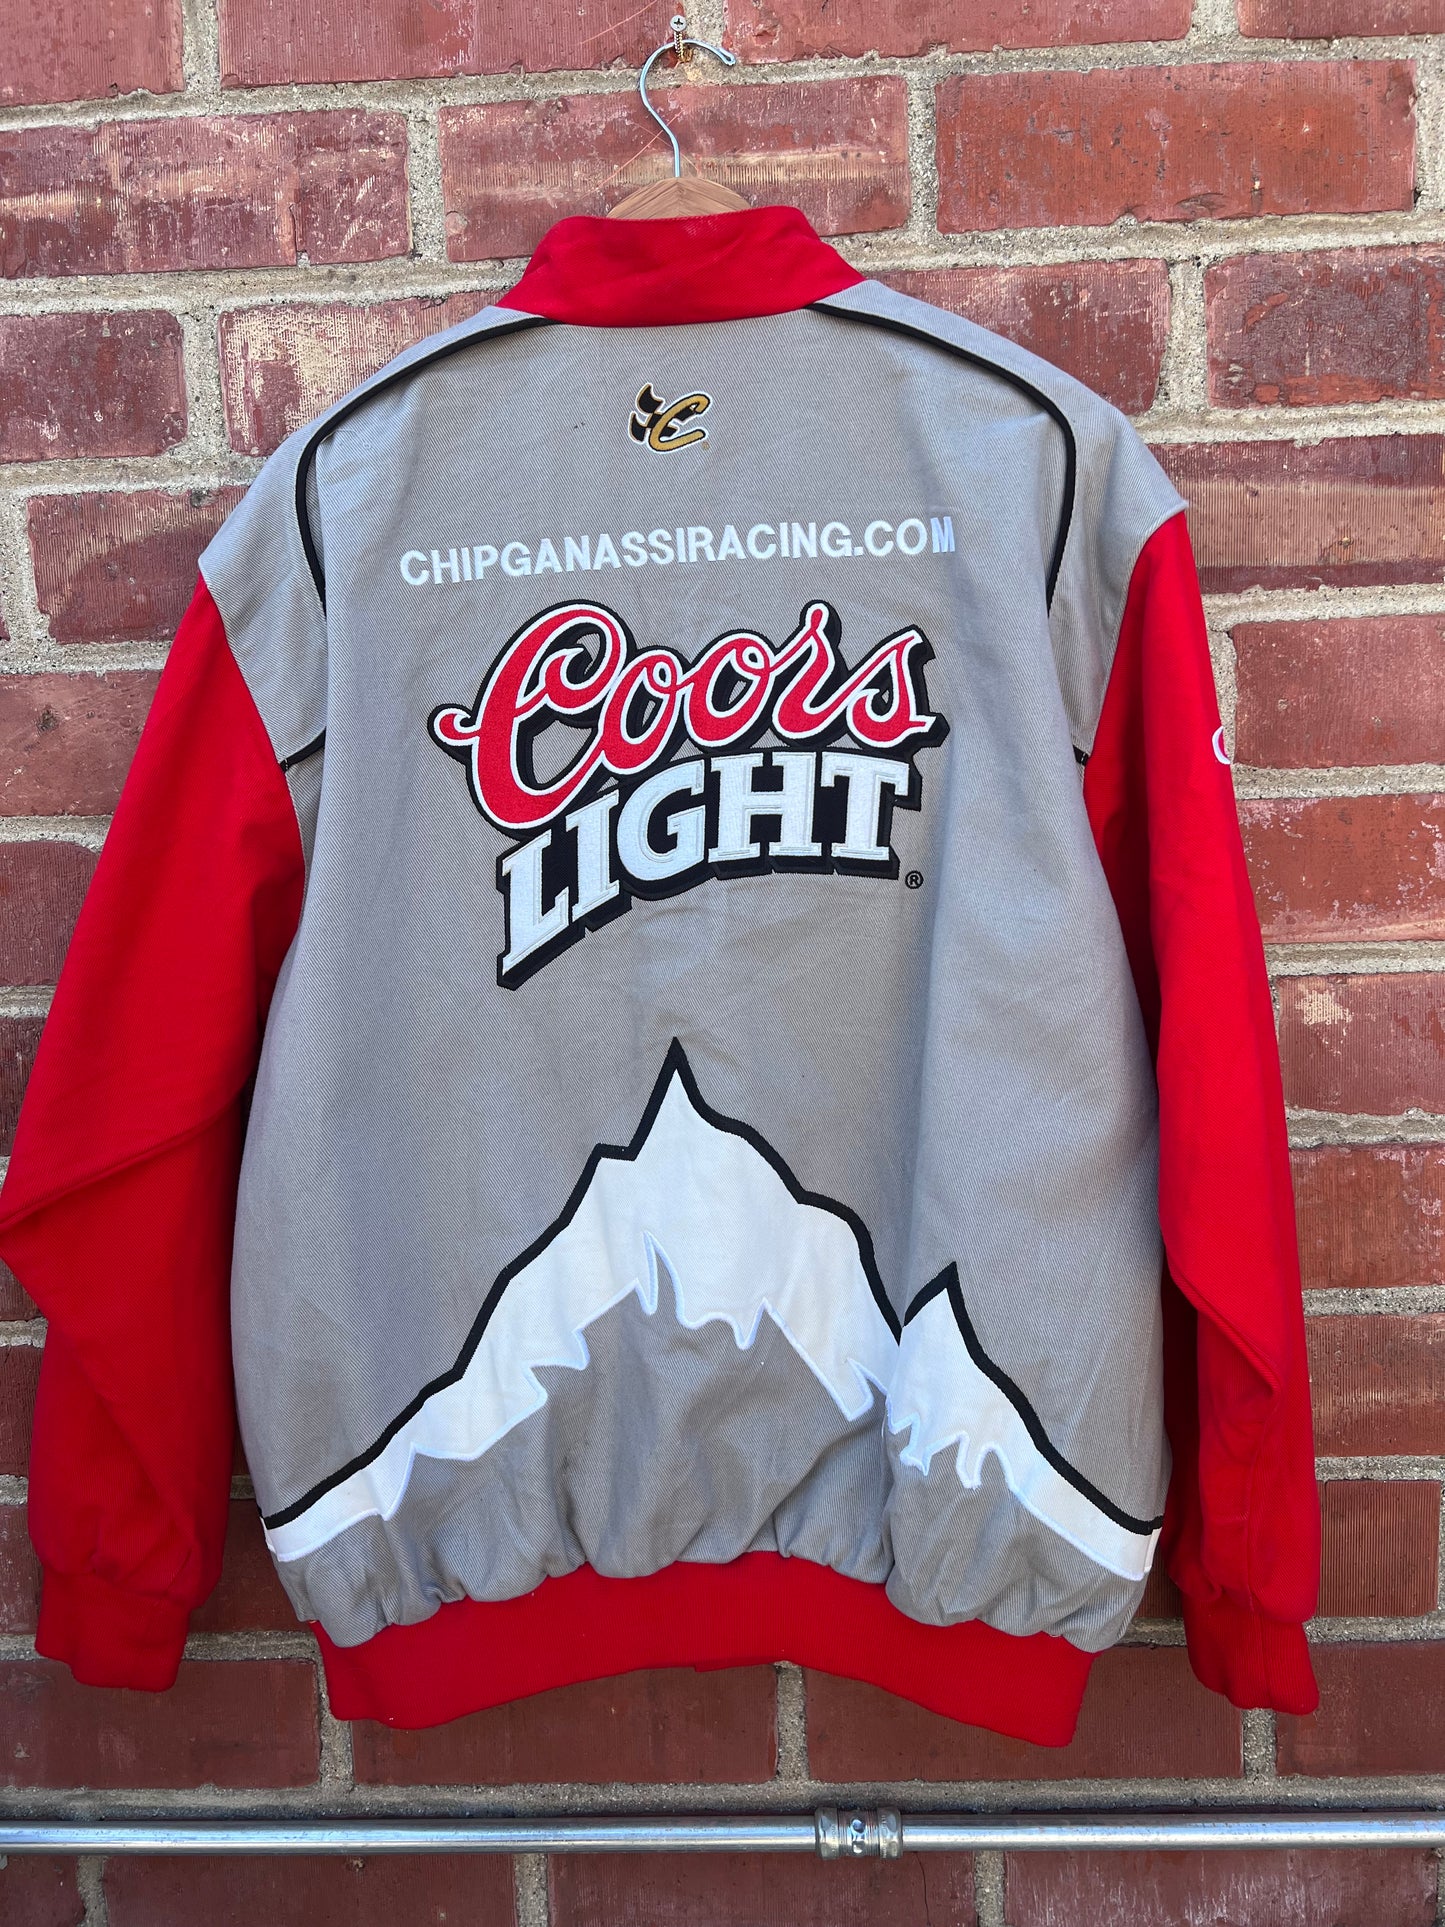 Coors Light Racing Jacket